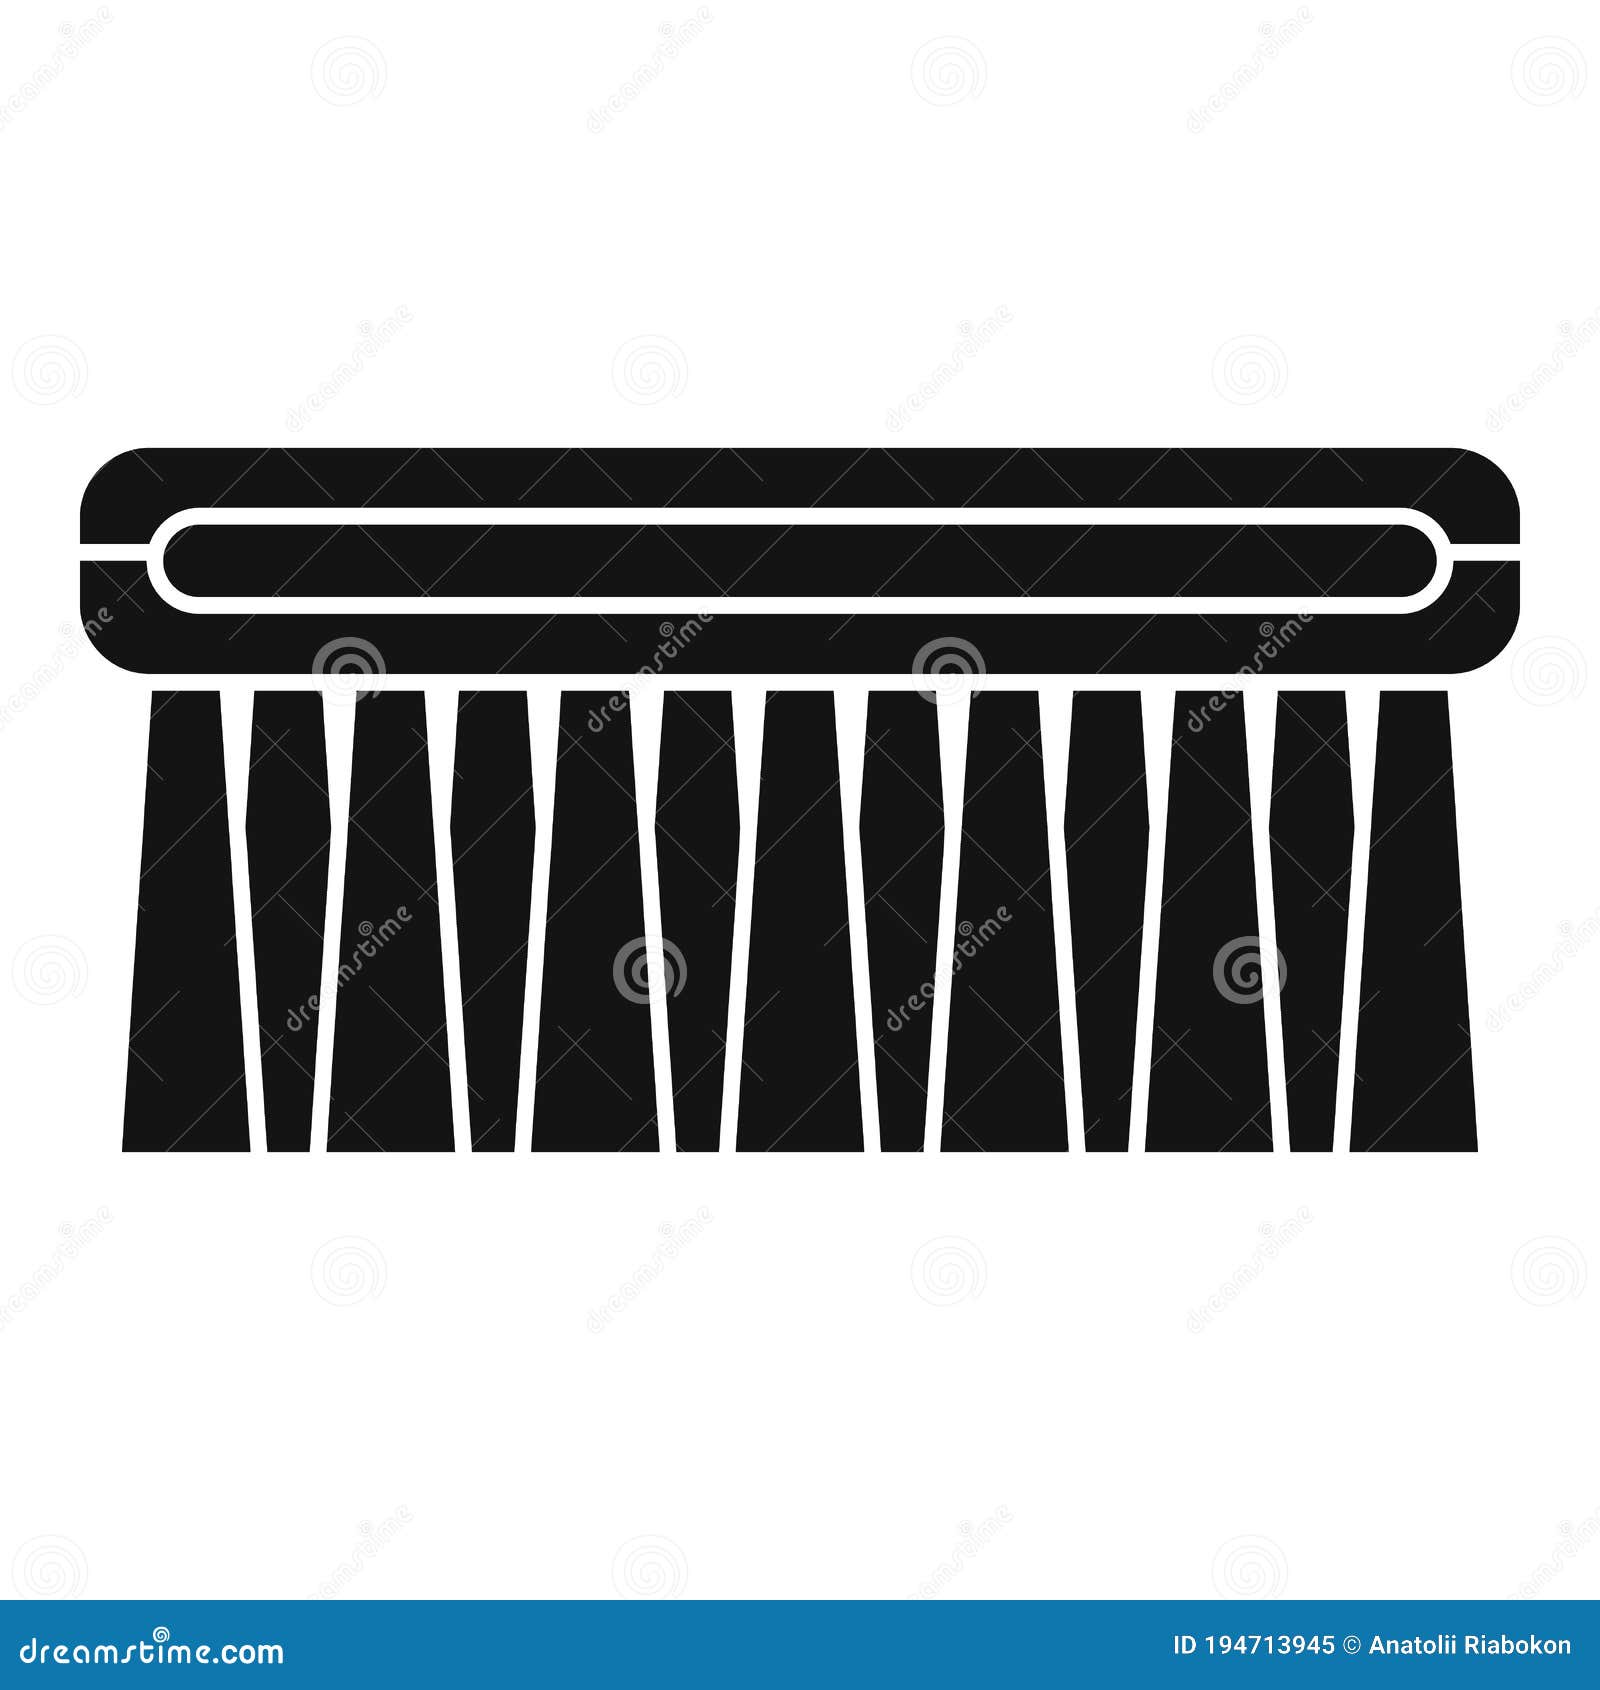 https://thumbs.dreamstime.com/z/shoe-cleaning-brush-icon-simple-style-shoe-cleaning-brush-icon-simple-illustration-shoe-cleaning-brush-vector-icon-web-194713945.jpg